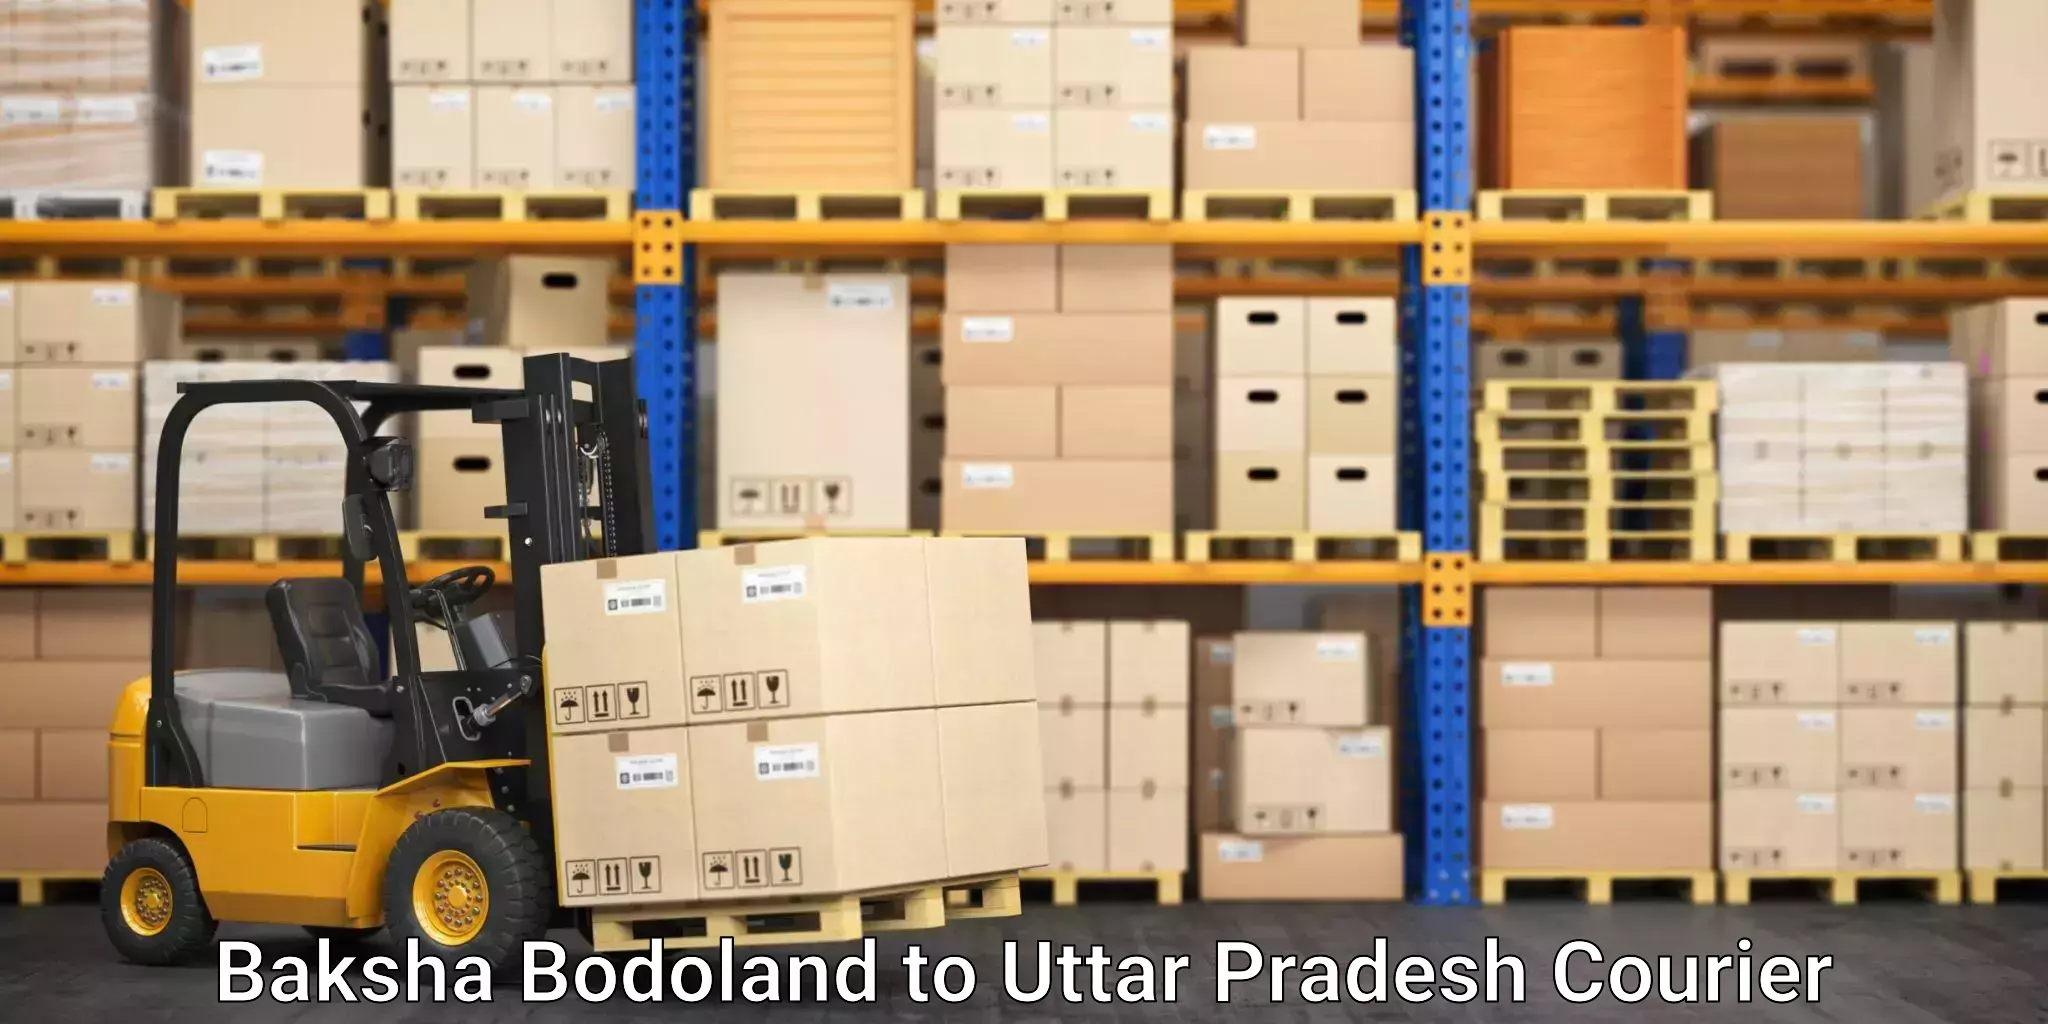 Tech-enabled shipping Baksha Bodoland to Kurebhar